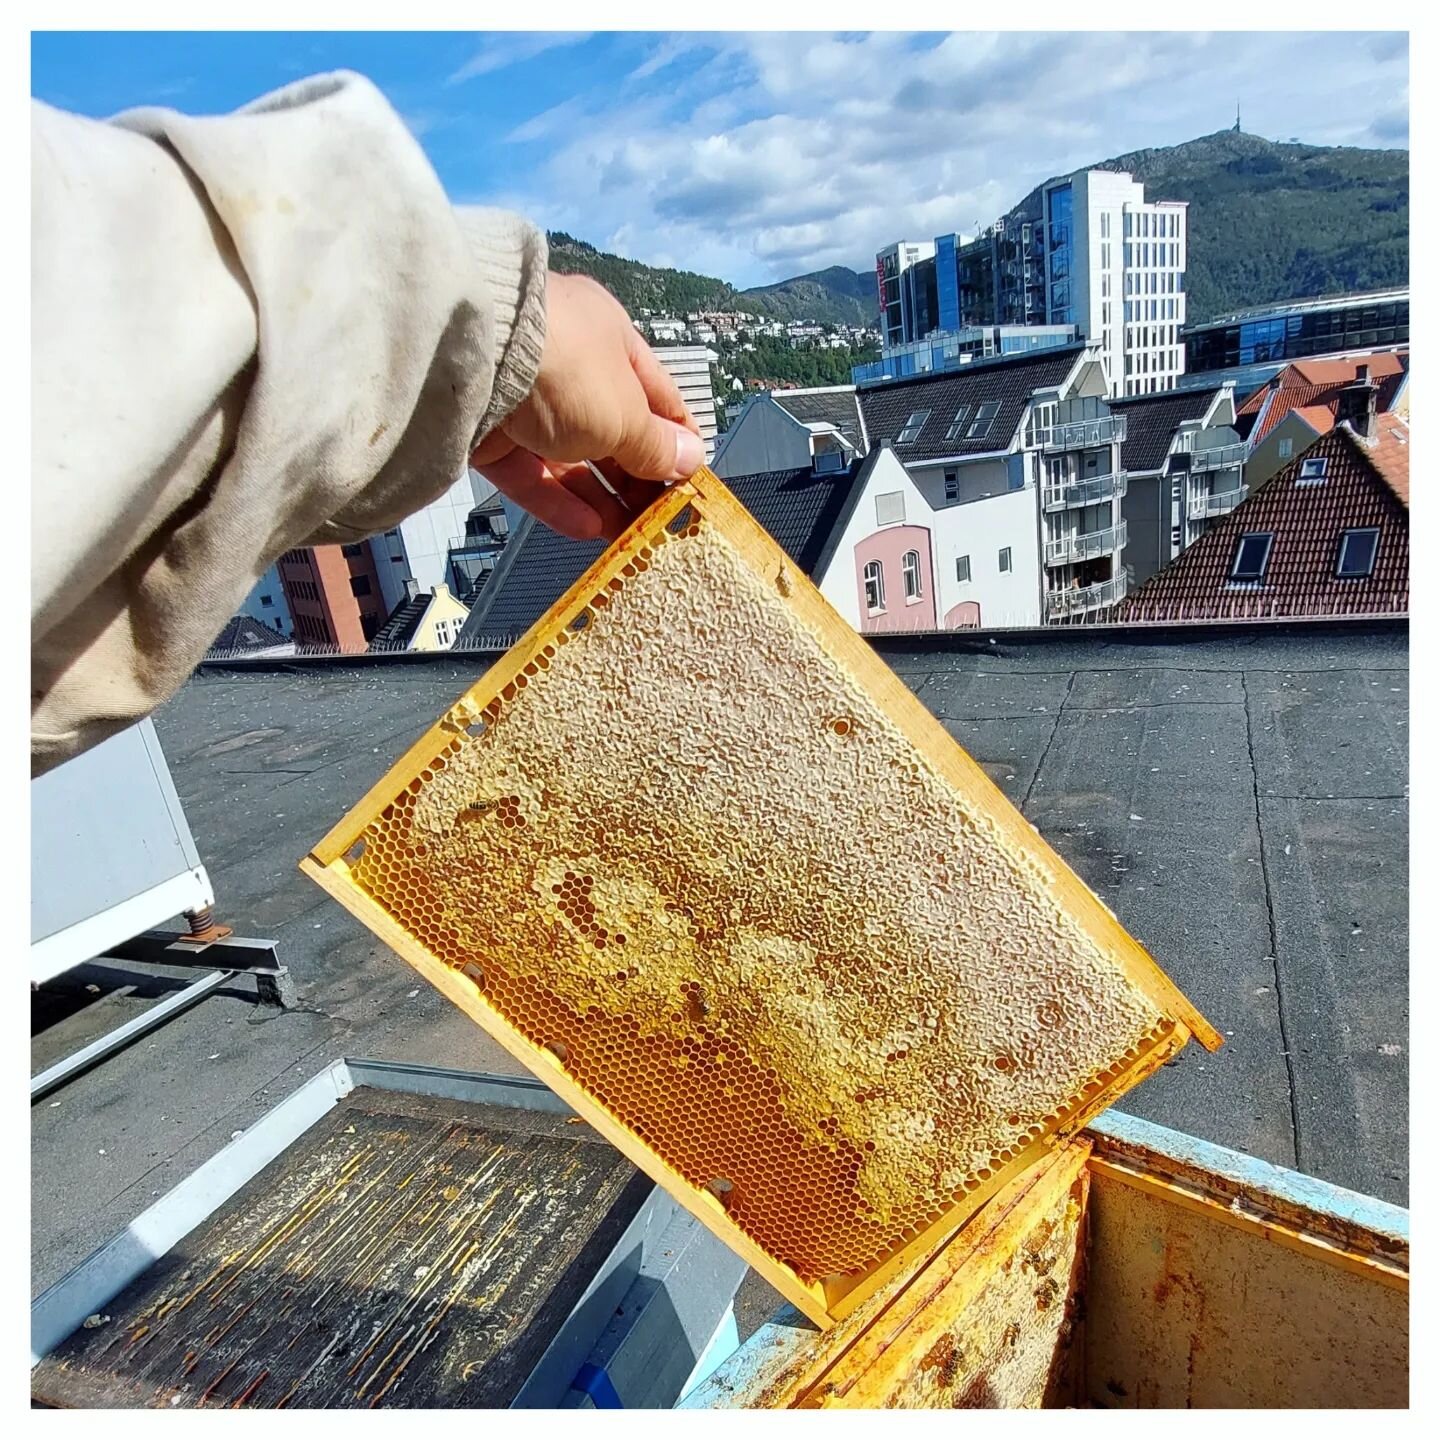 18&deg;C☀️
Time to harvest the @grieghallen honey in doentown Bergen. 🐝
.
.
.
#beekeeper #beekeeping&nbsp; #rooftopbeekeeping #backyardbeekeeping #urbanbeekeeping #beehive 
#honey #apiary #apiculture #abeilles #abejas #bee #honeybee #bees #bienen #i